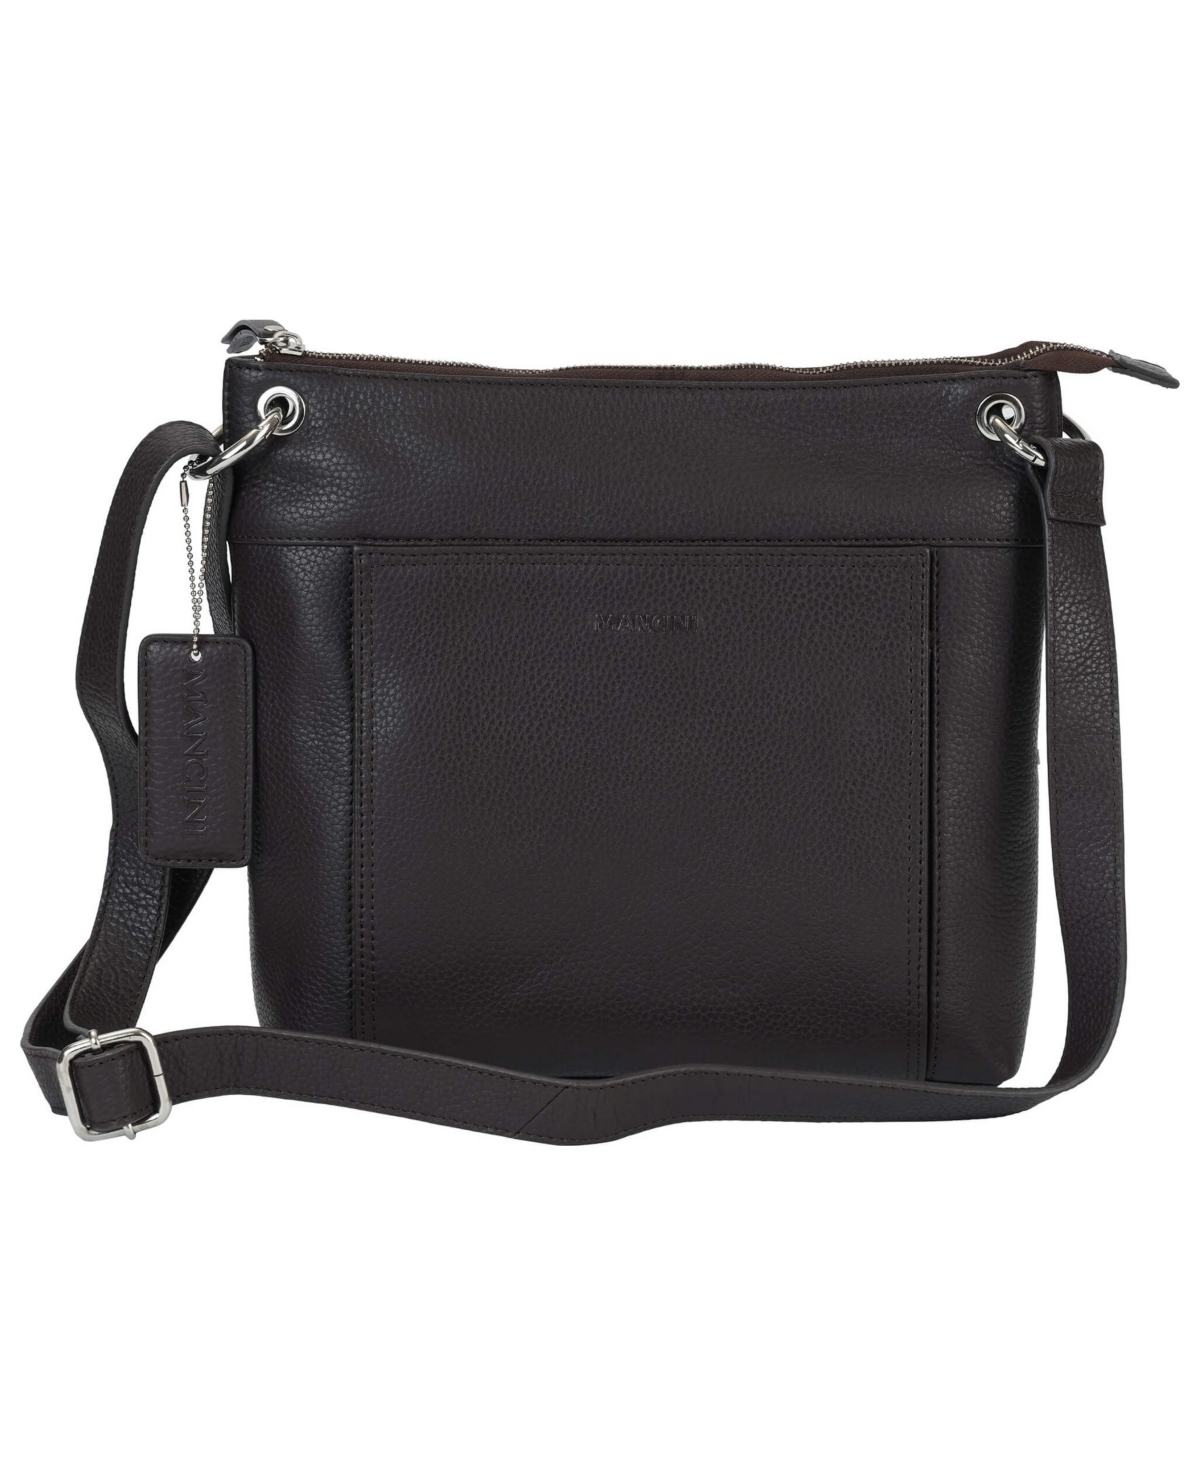 Pebble Trish Leather Crossbody Handbag with Organizer - White